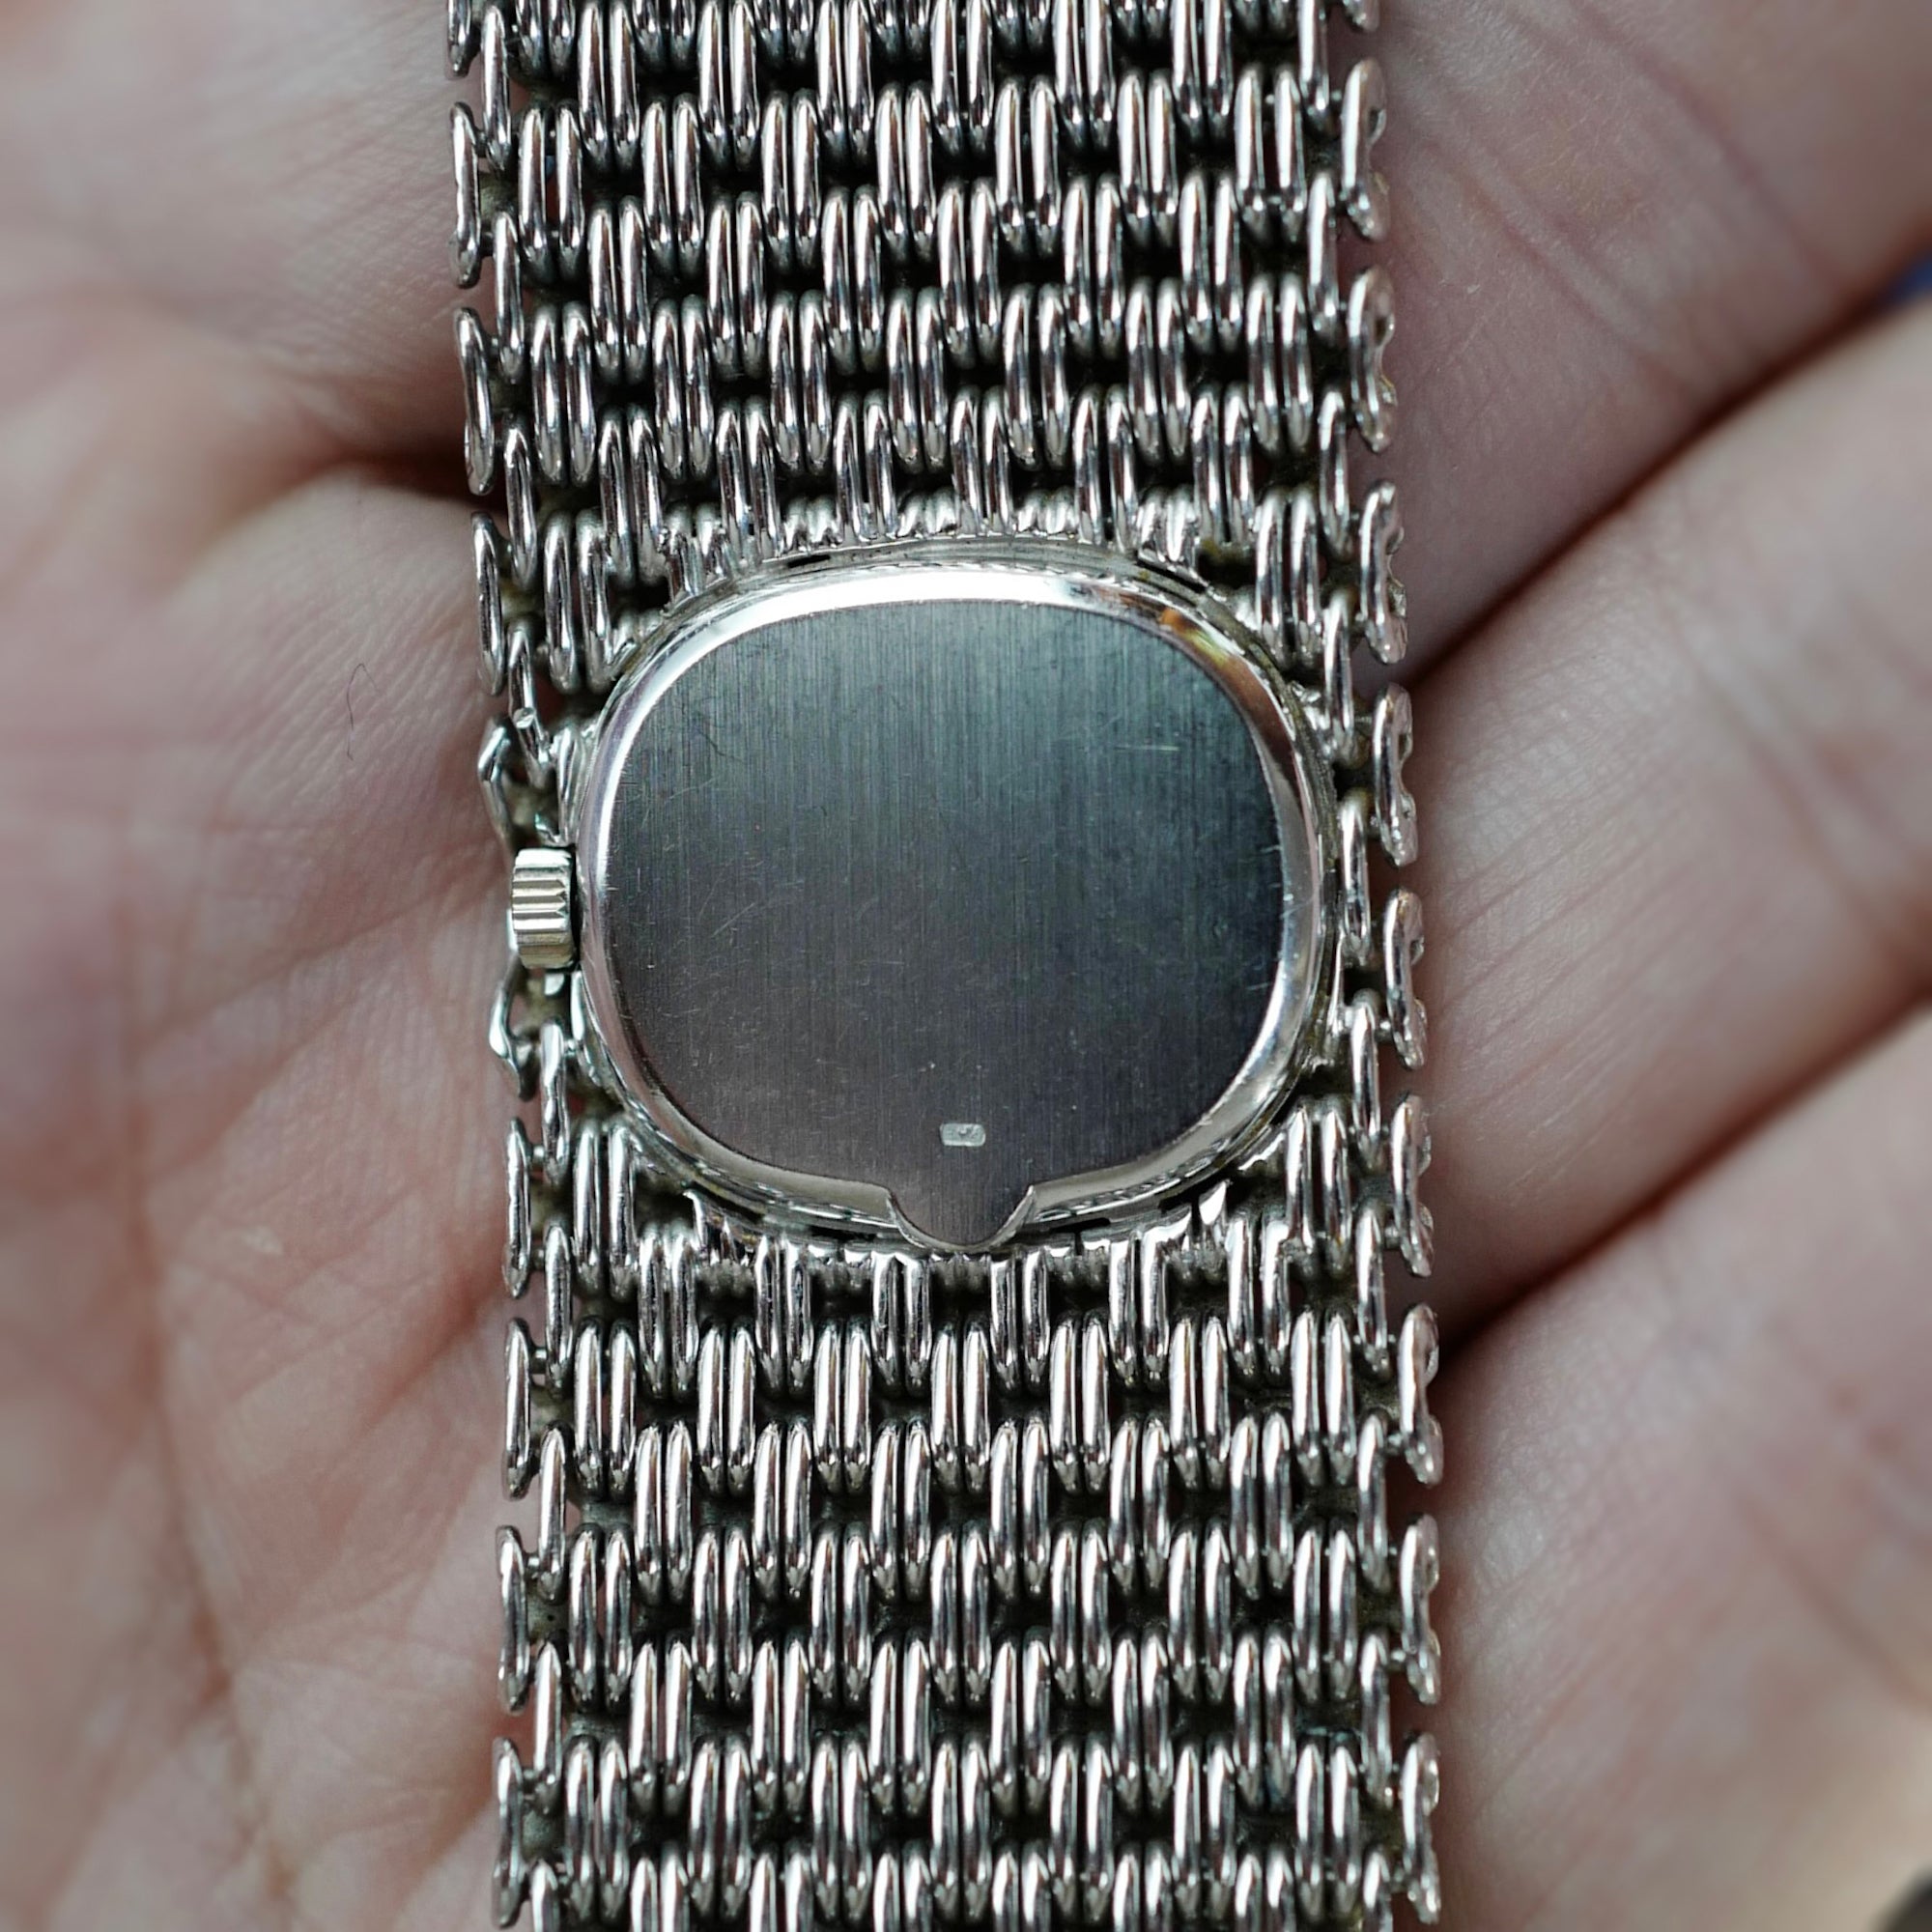 Patek Philippe - Patek Philippe White Gold Bracelet Watch Ref. 4151 - The Keystone Watches